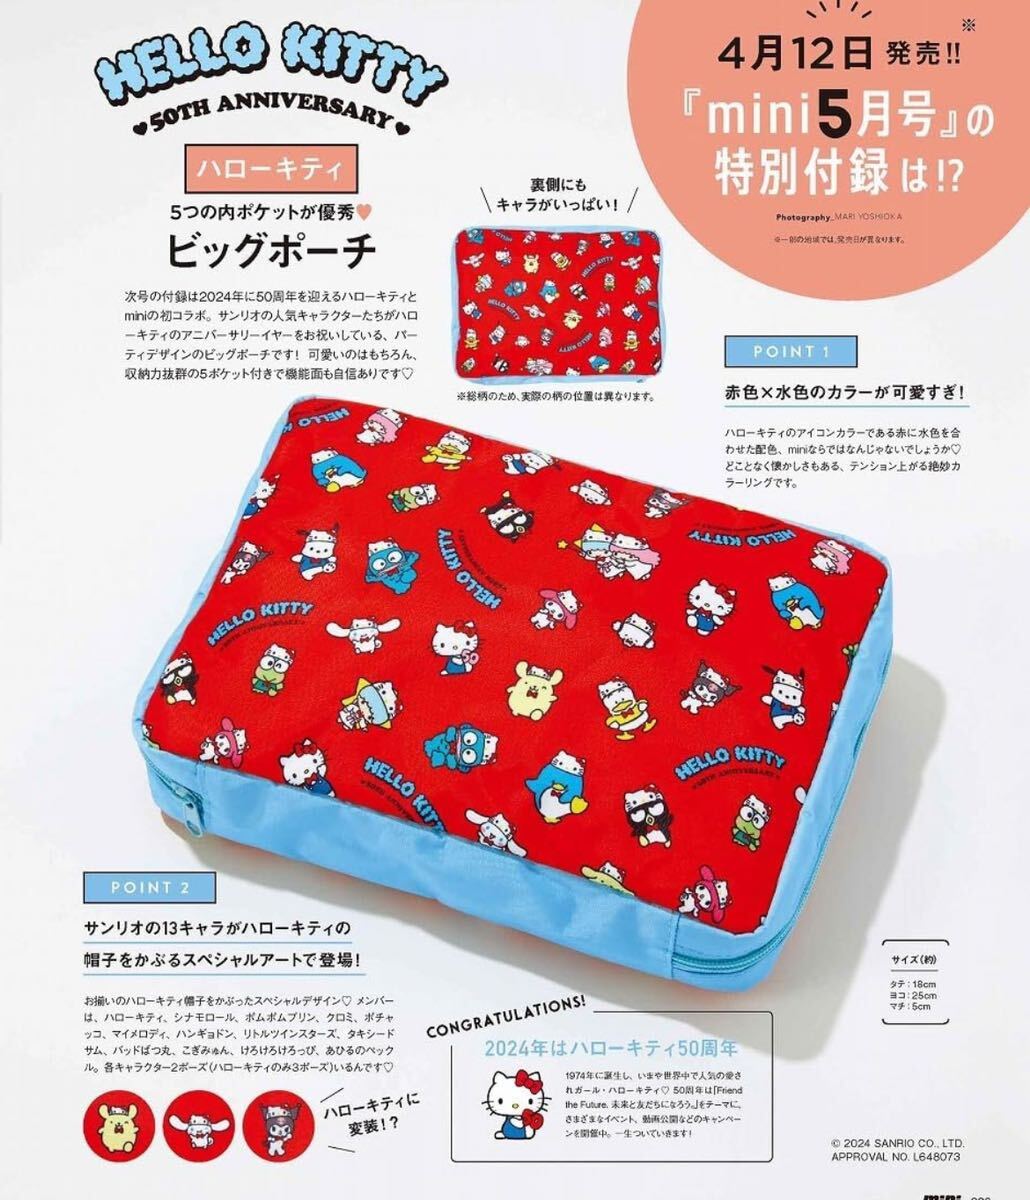  Hello Kitty * большой сумка ×2 штук [ журнал дополнение ]